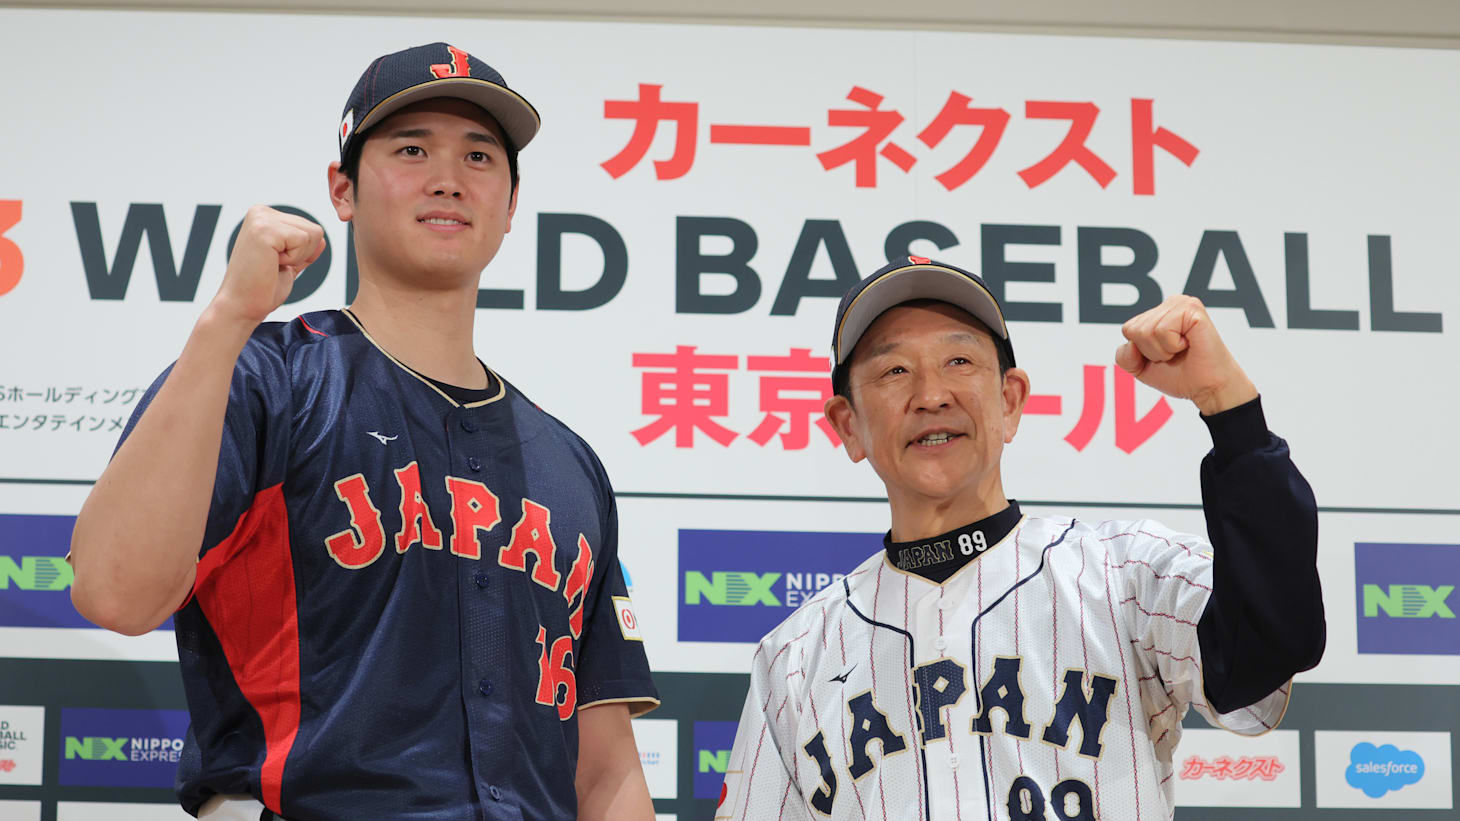 Where to buy Japan, Shohei Ohtani World Baseball Classic Champion gear  online 